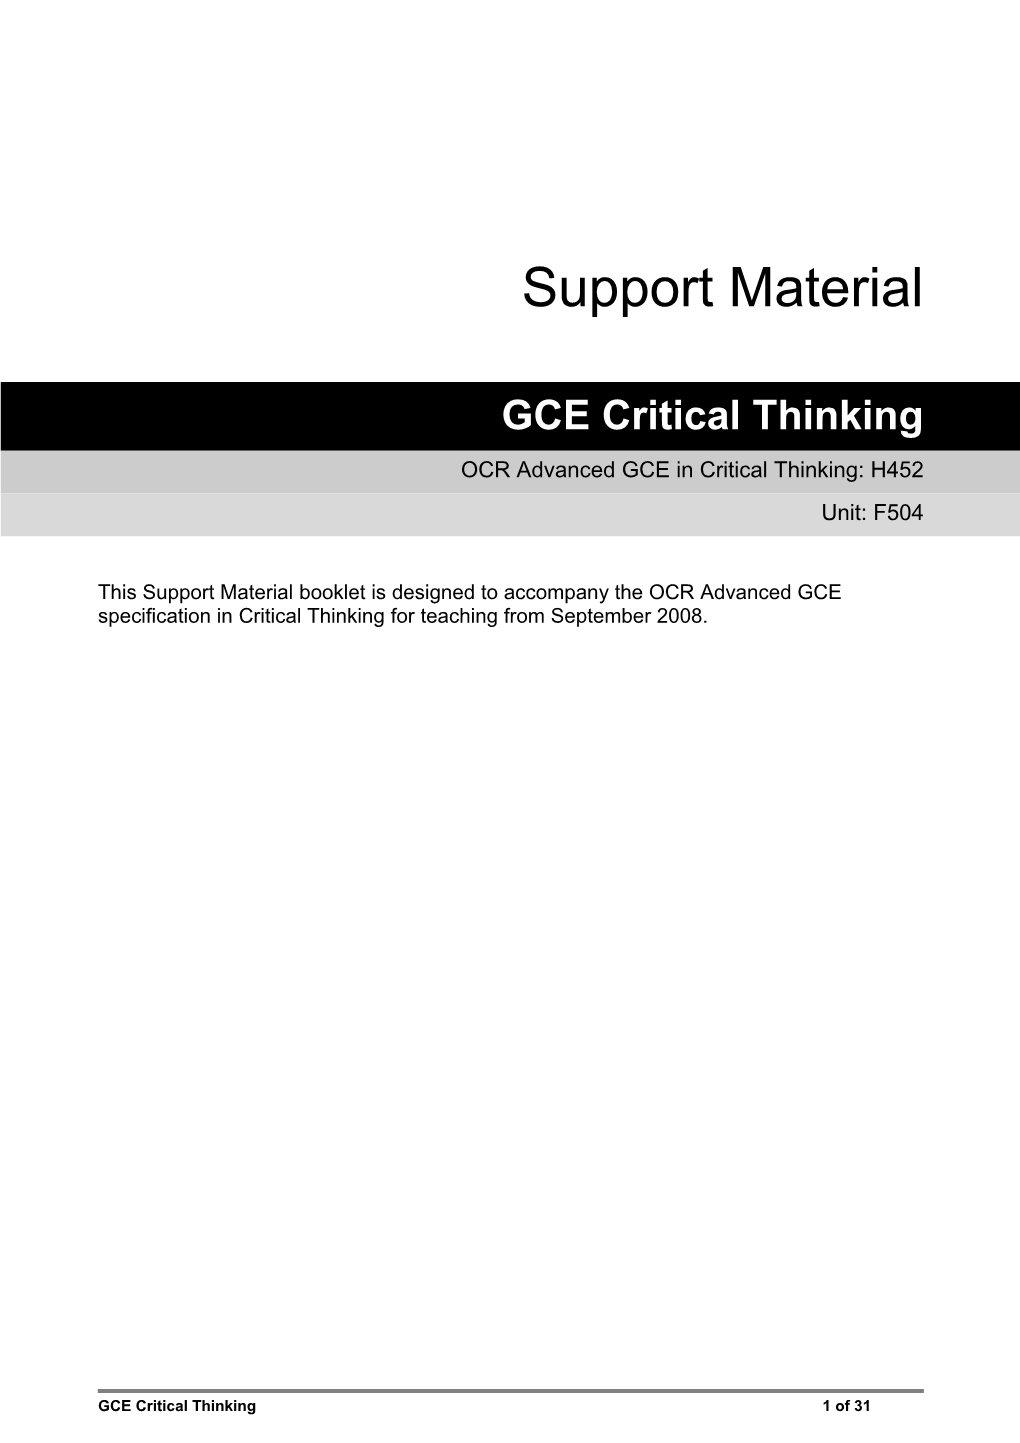 GCE Critical Thinking